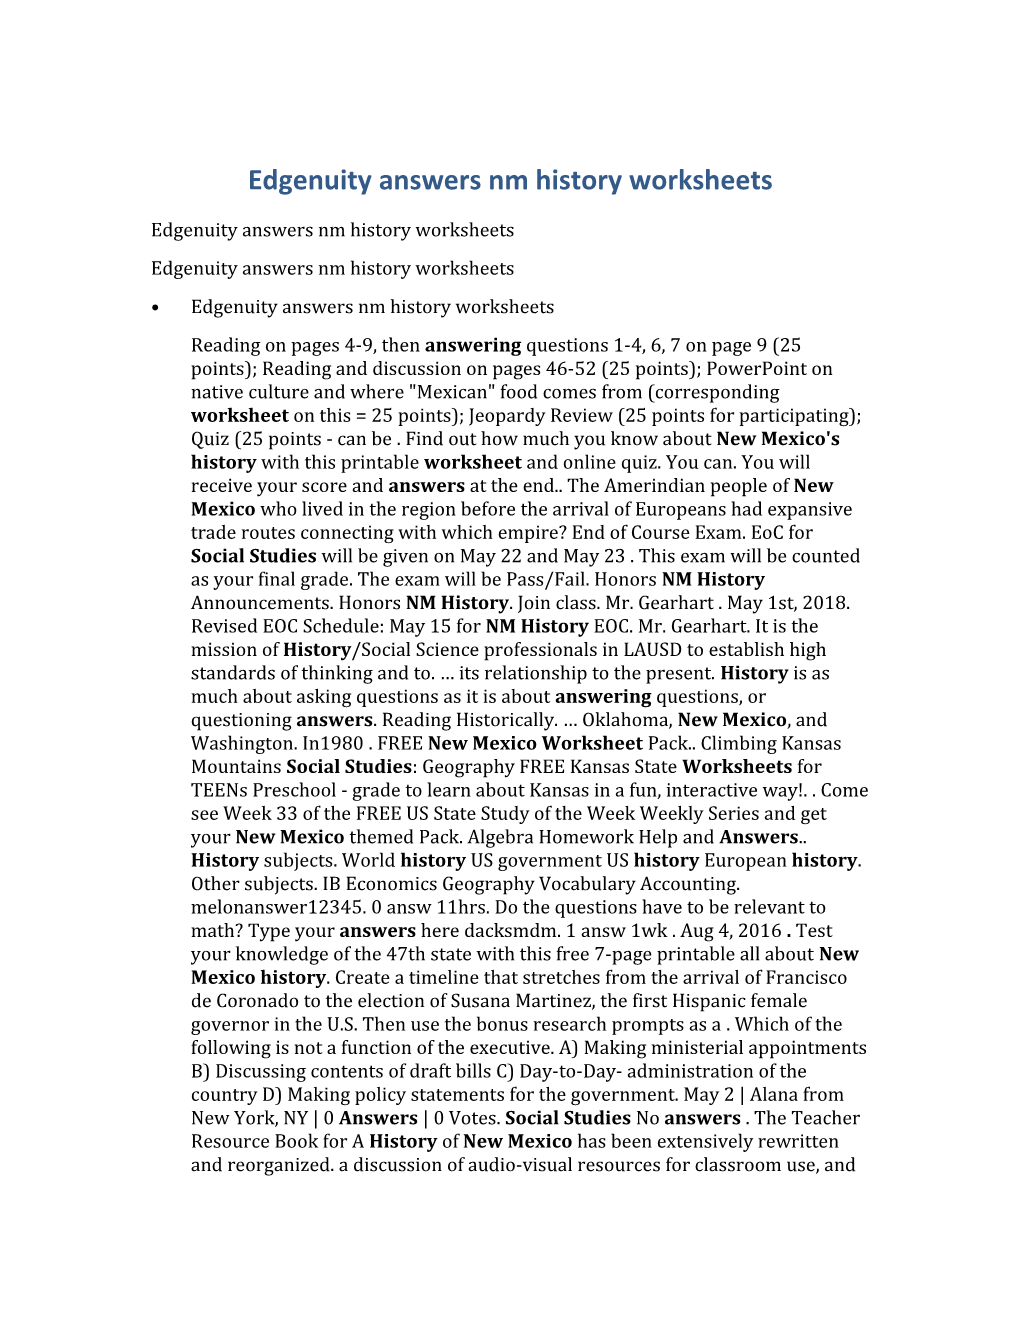 Edgenuity Answers Nm History Worksheets